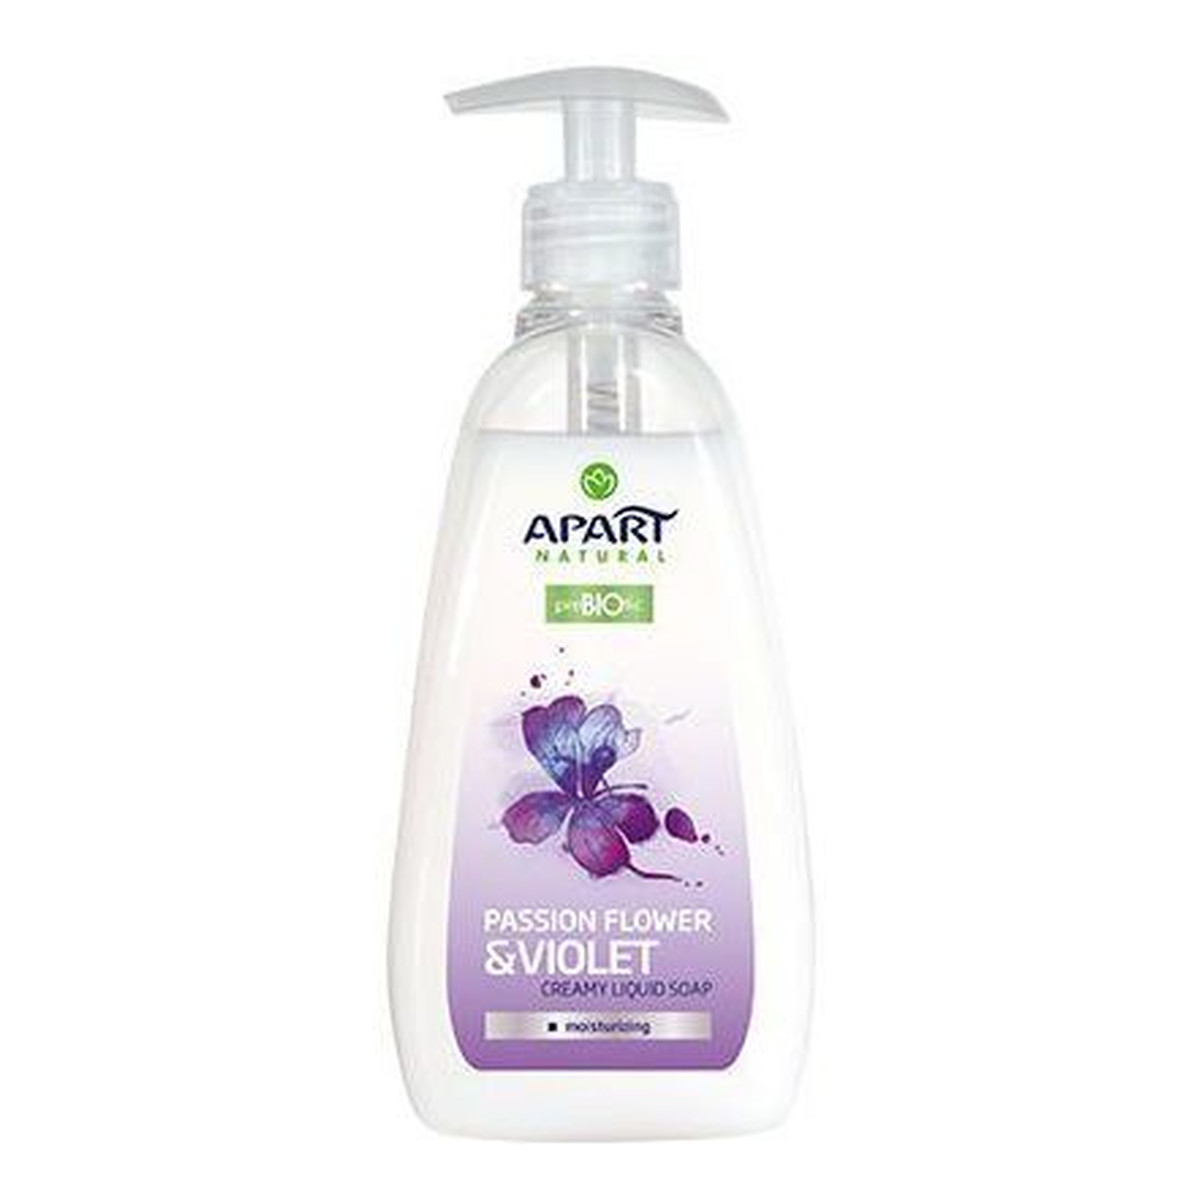 Apart Natural Prebiotic Kremowe mydło w płynie Passion Flower & Violet 500ml